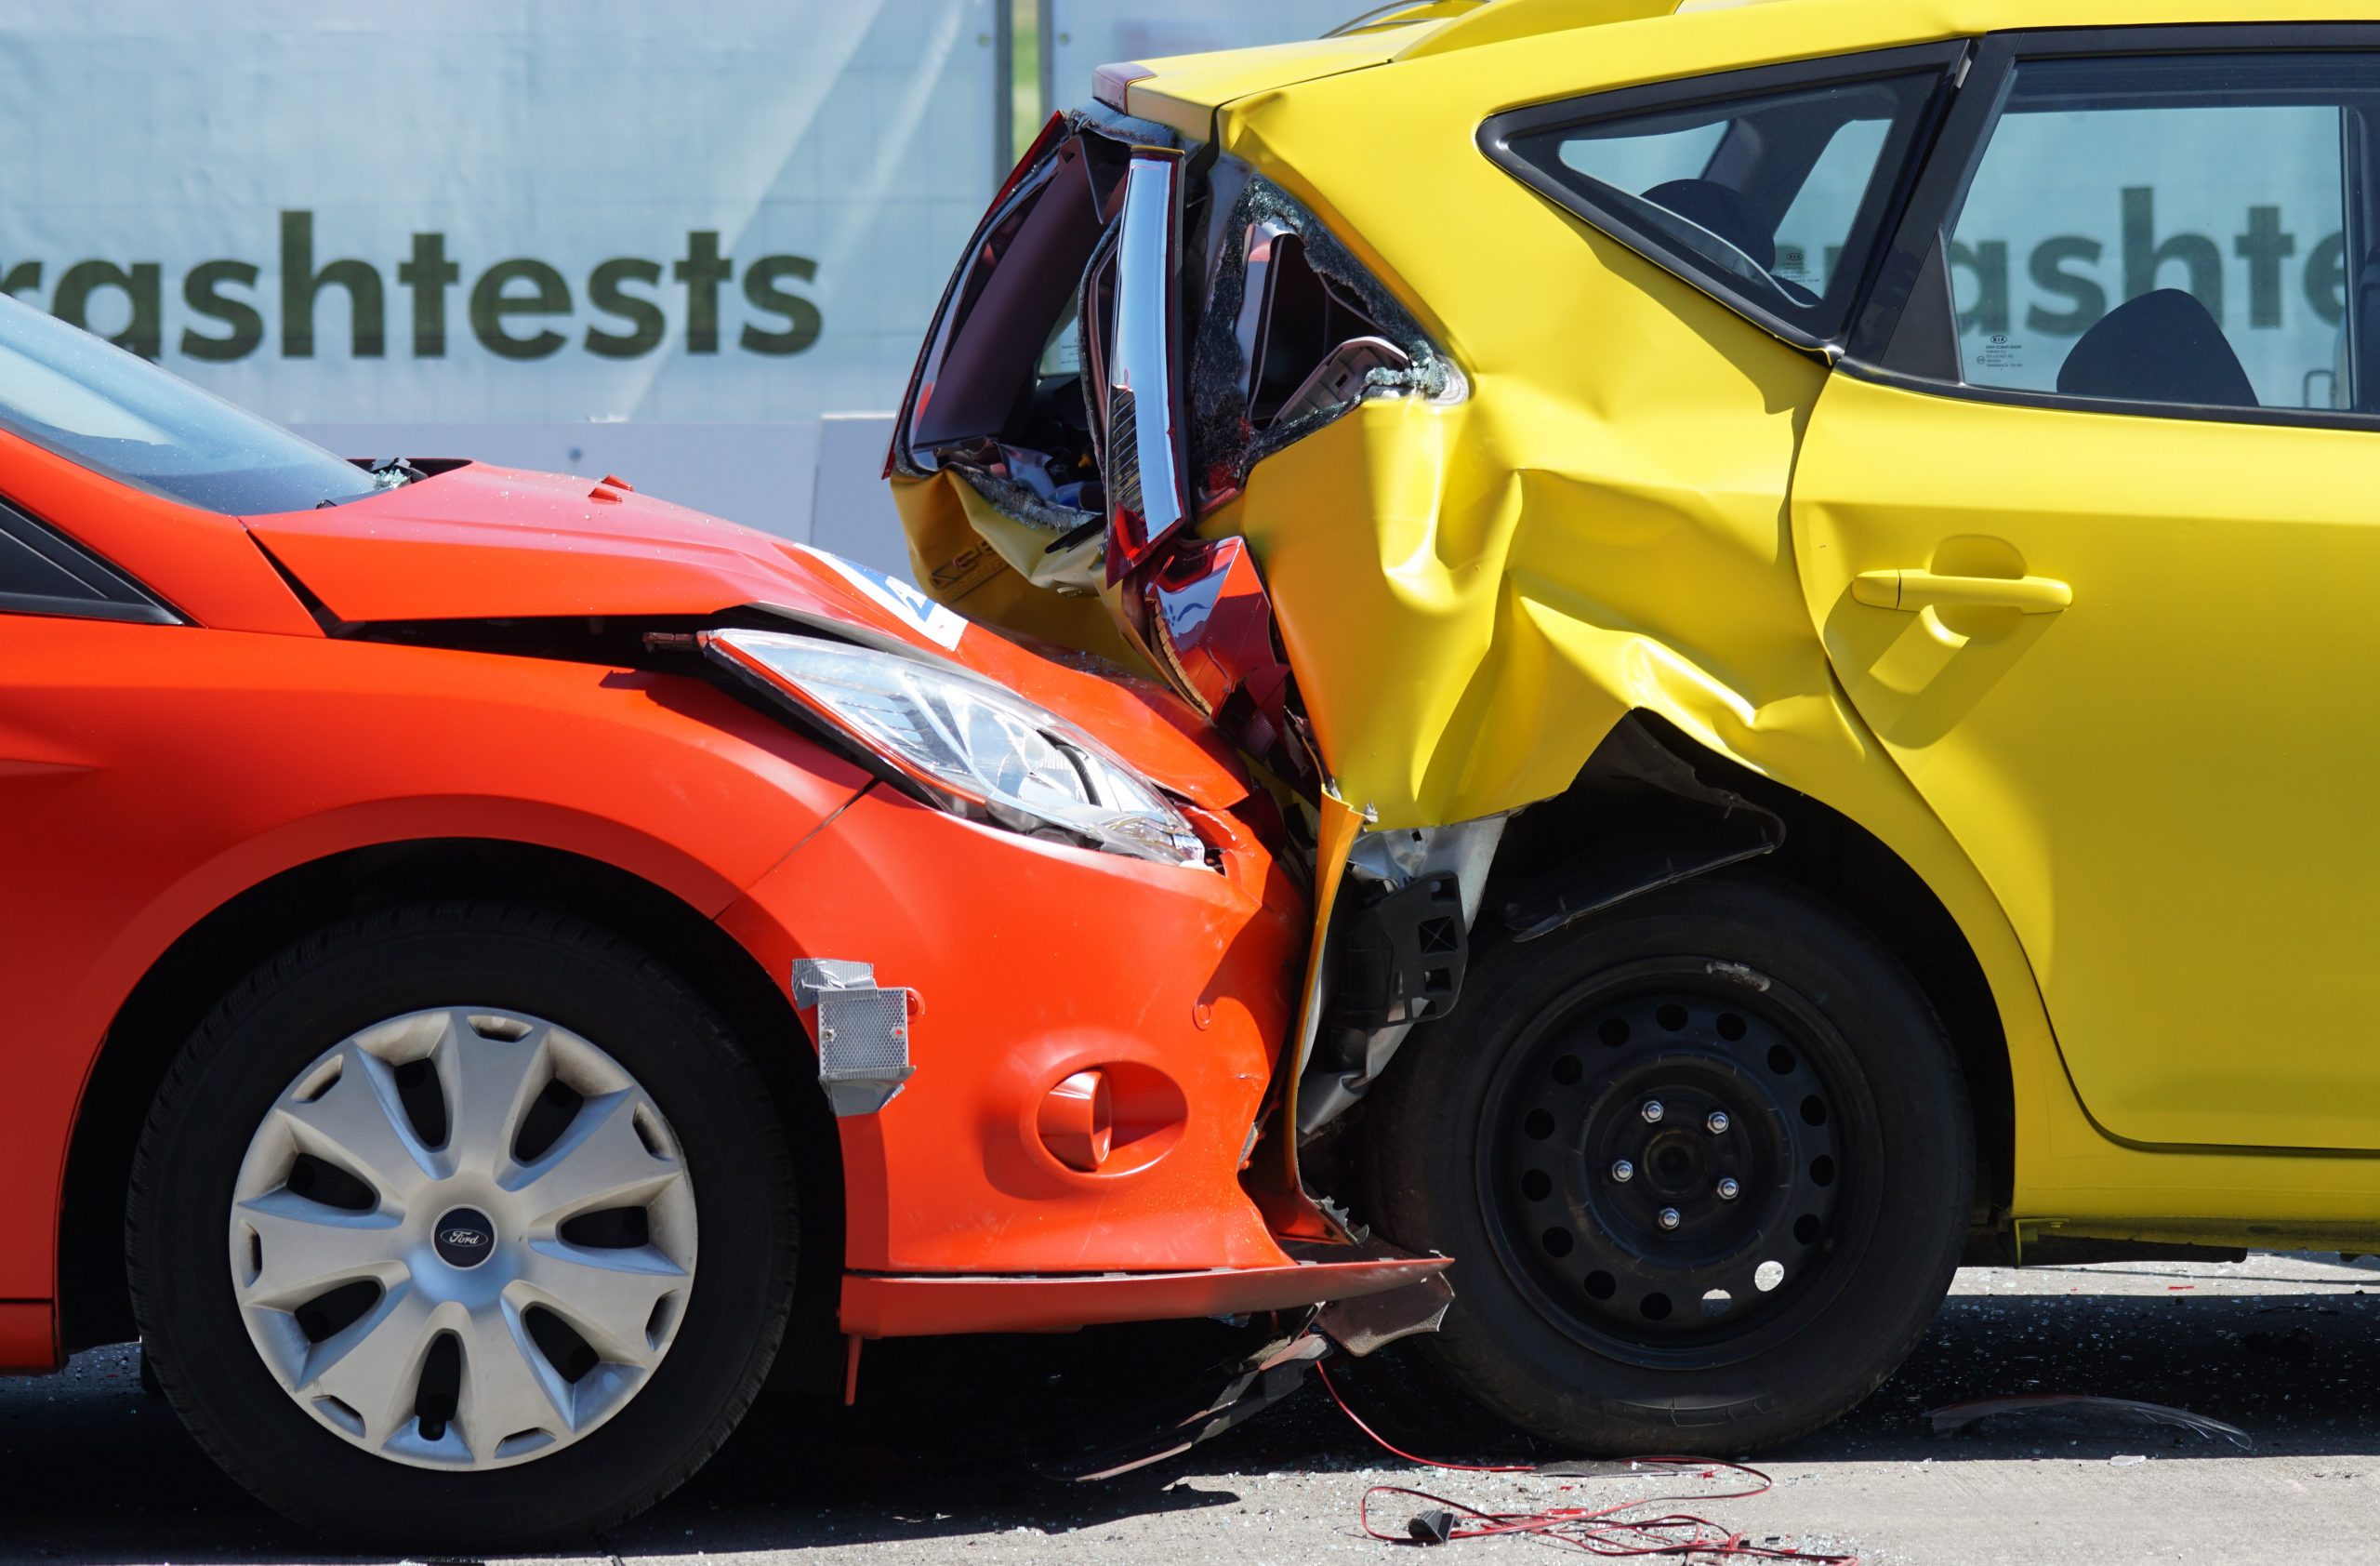 You need Automobile Liability Insurance